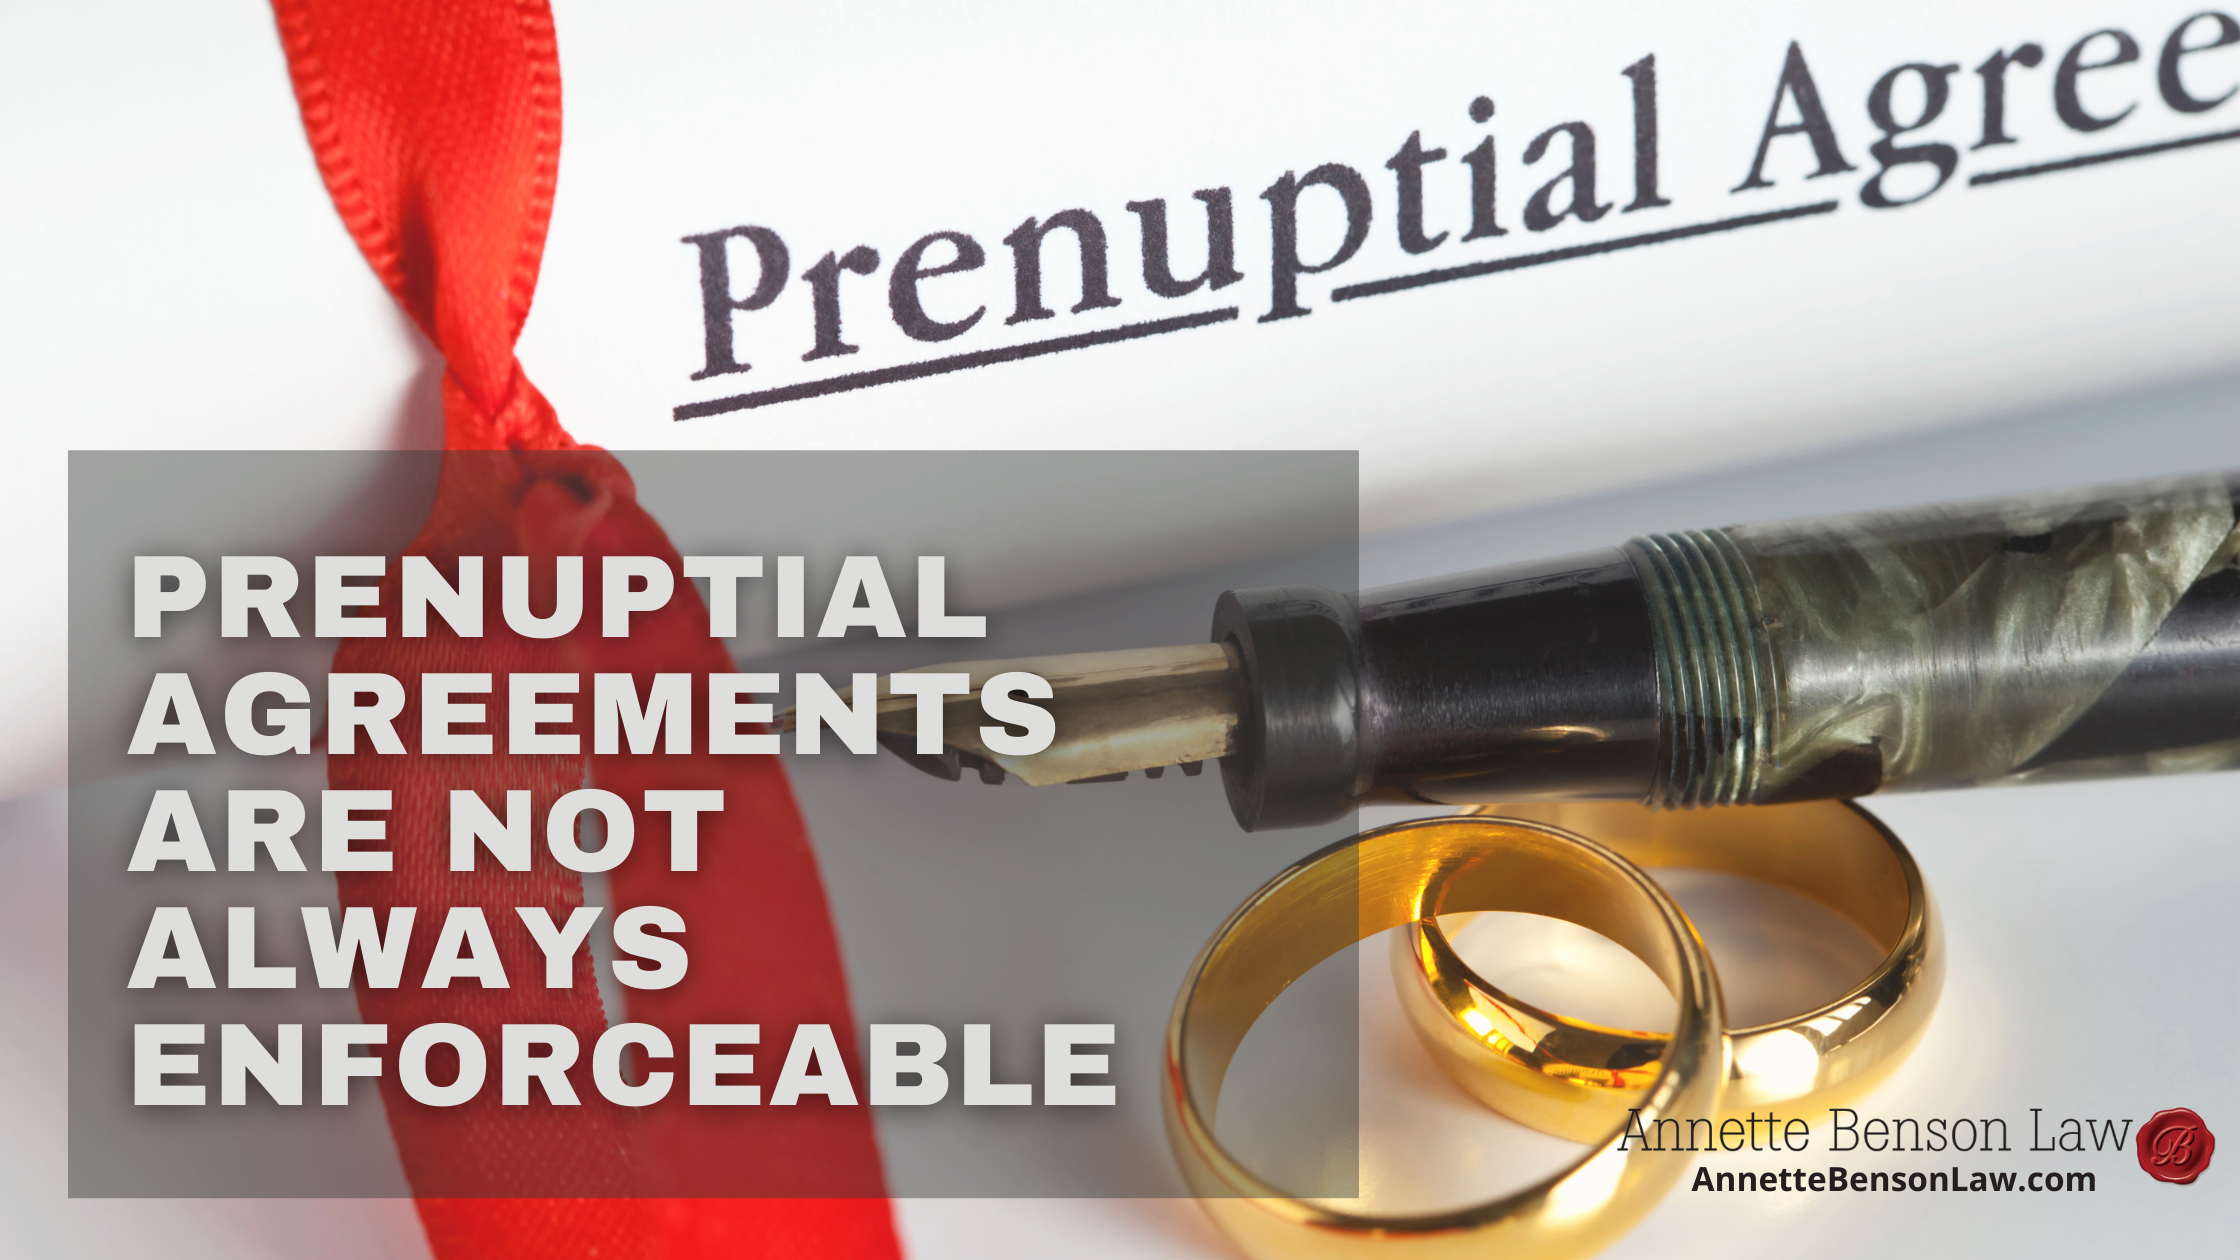 Prenuptial agreements are not always enforceable